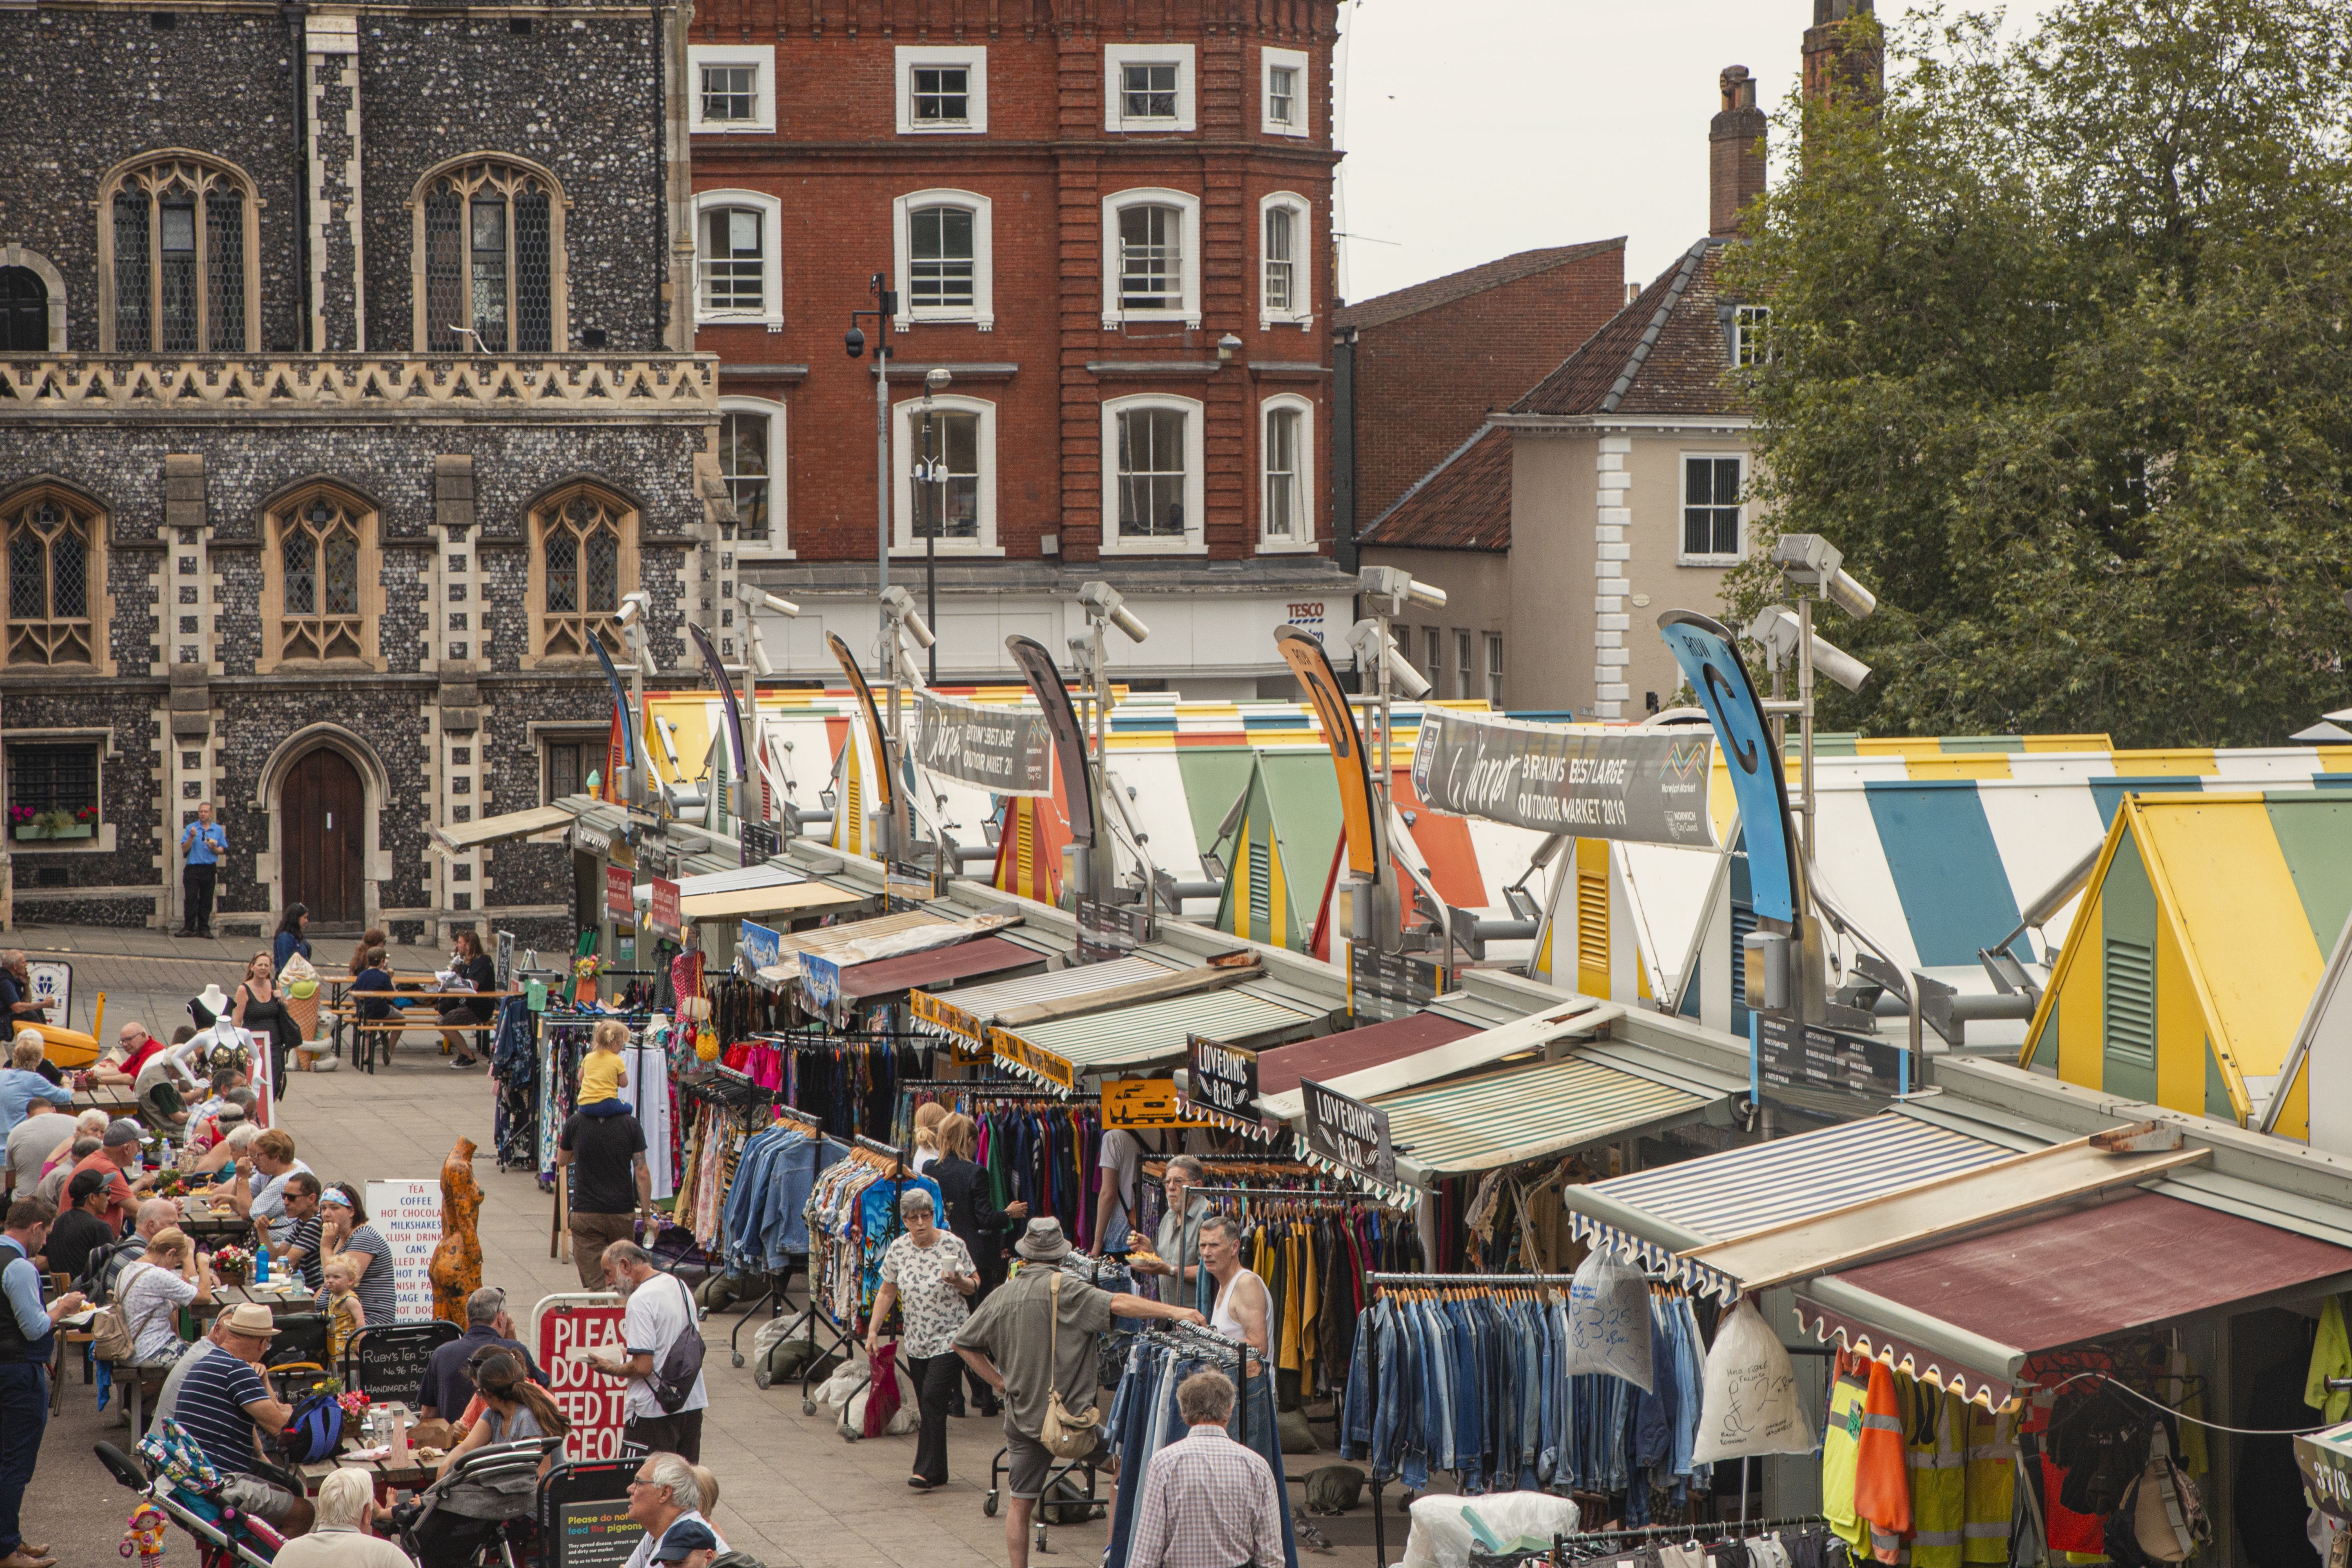 Norwich's Award-Winning Market on a busy summer day